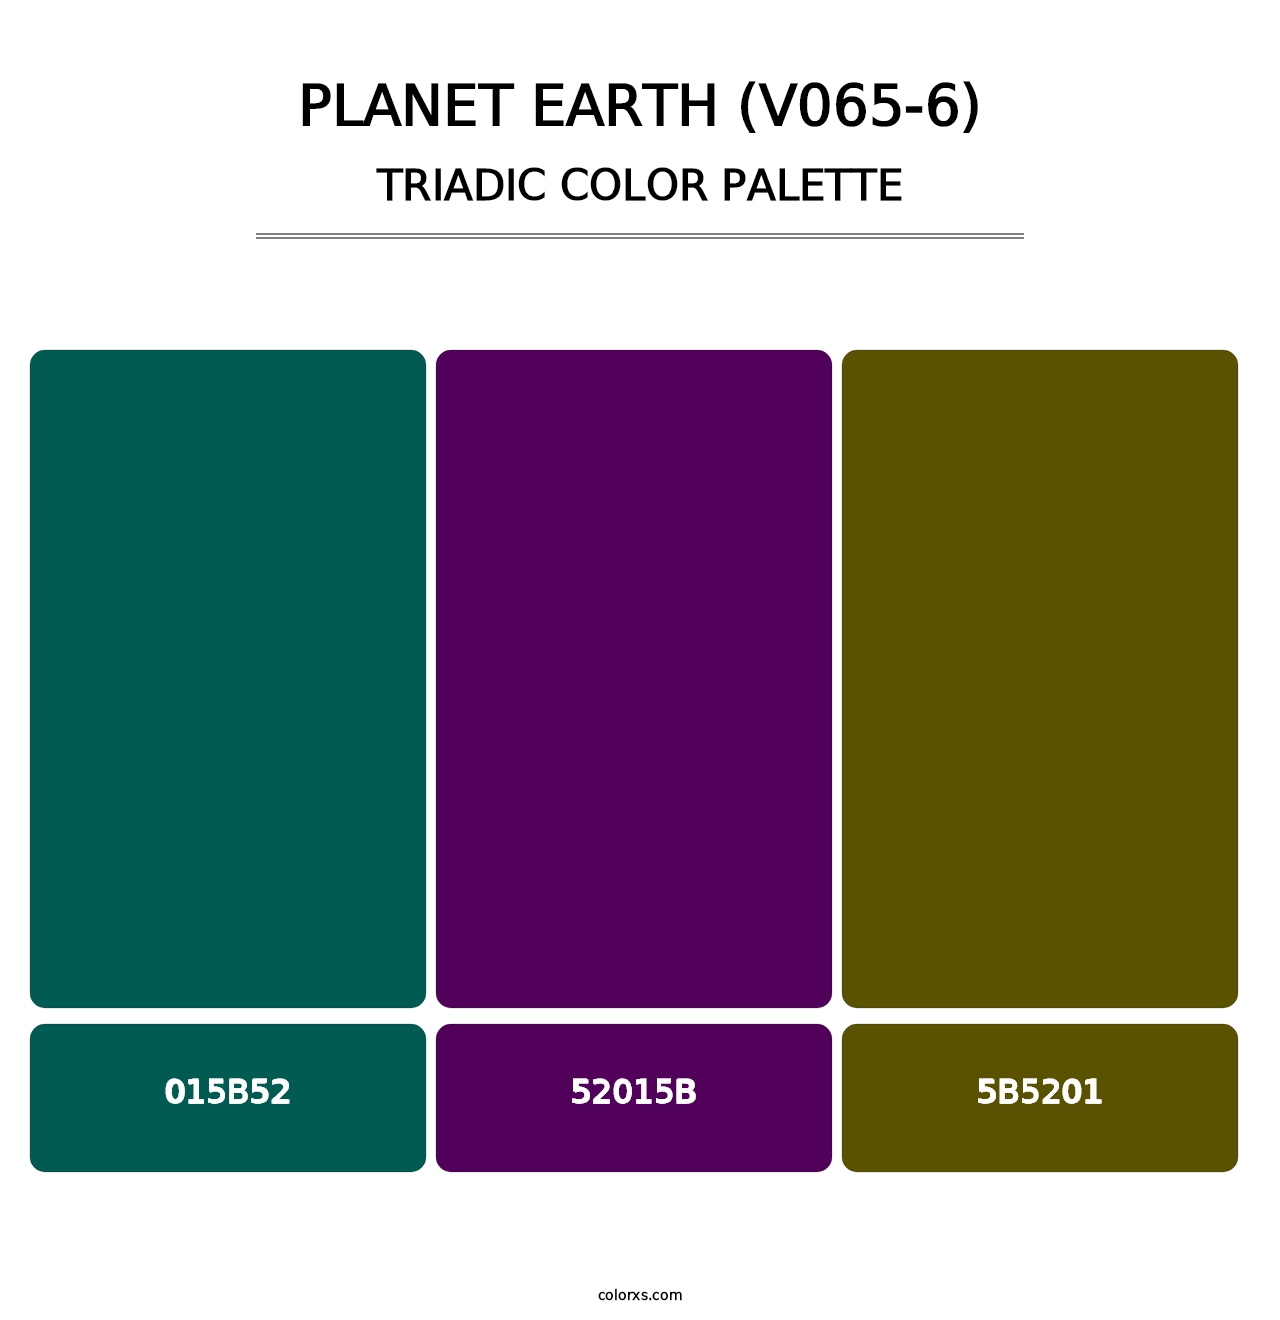 Planet Earth (V065-6) - Triadic Color Palette